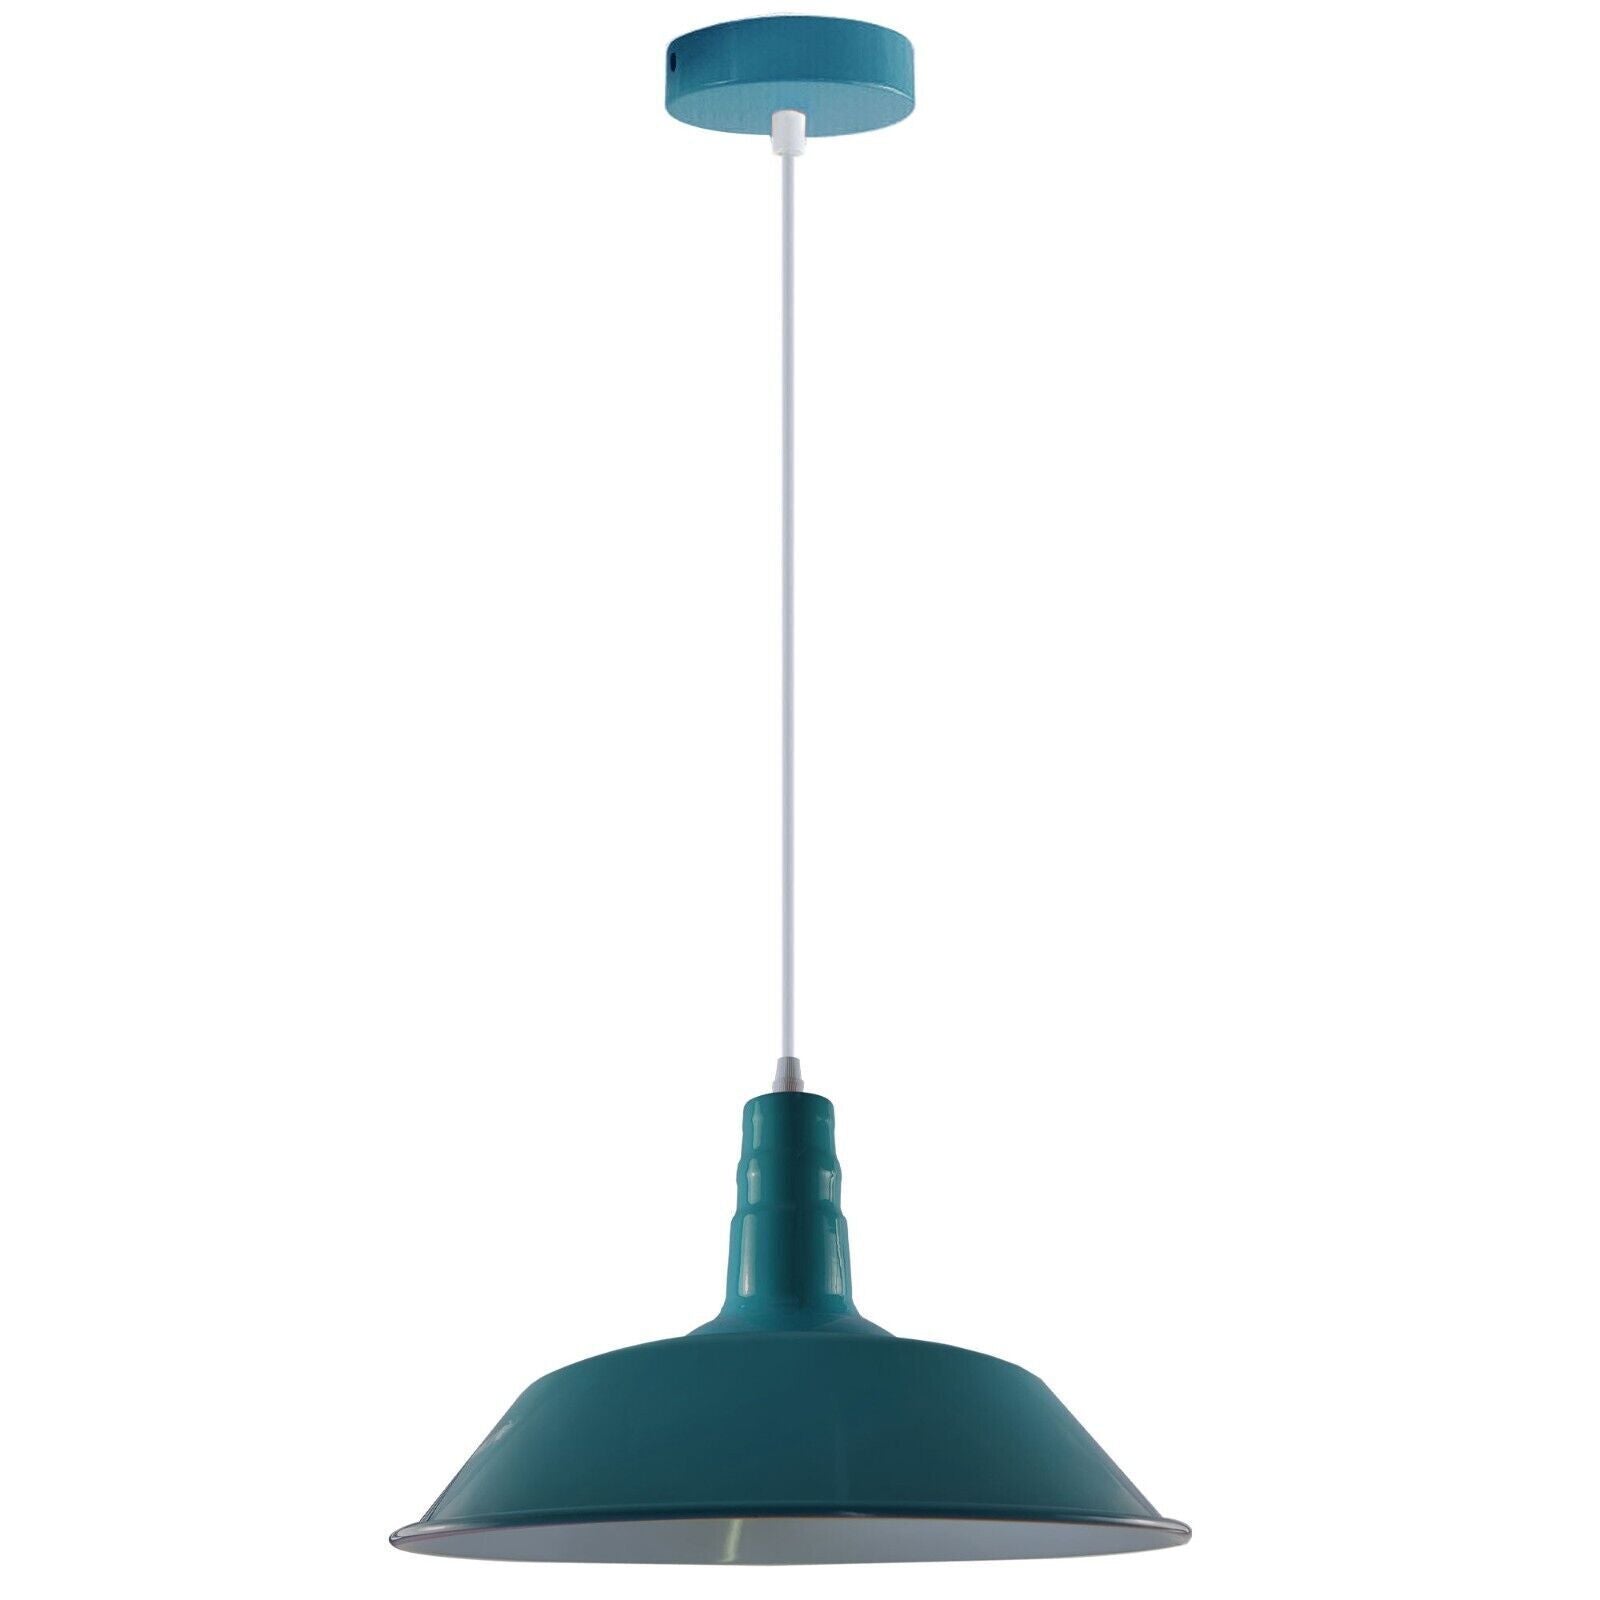 Modern Adjustable Hanging Bowl Blue Pendant Lamp E27 Holder